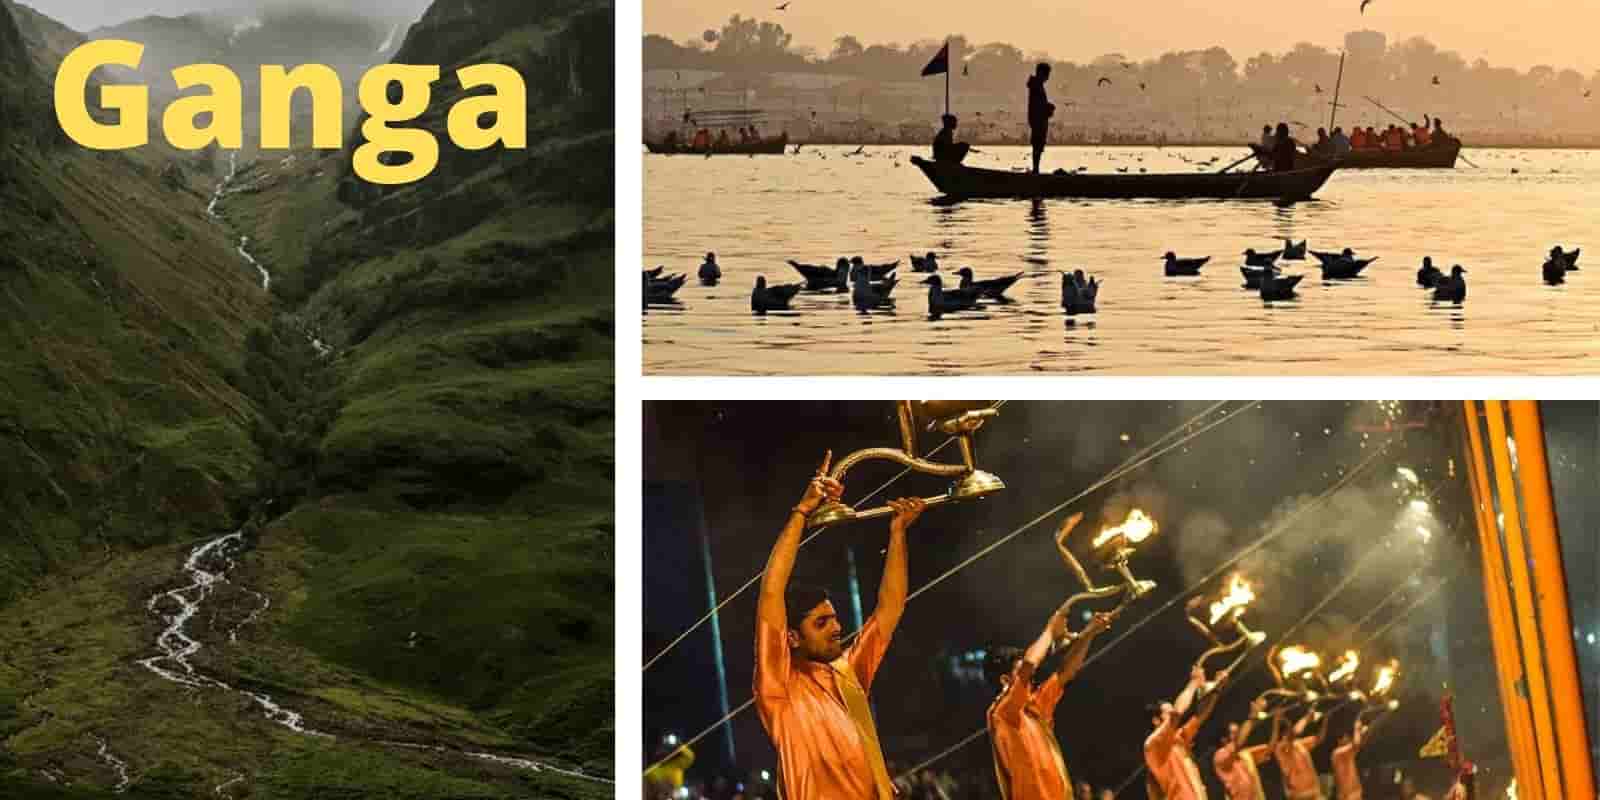 Ganga - the longest River in India 